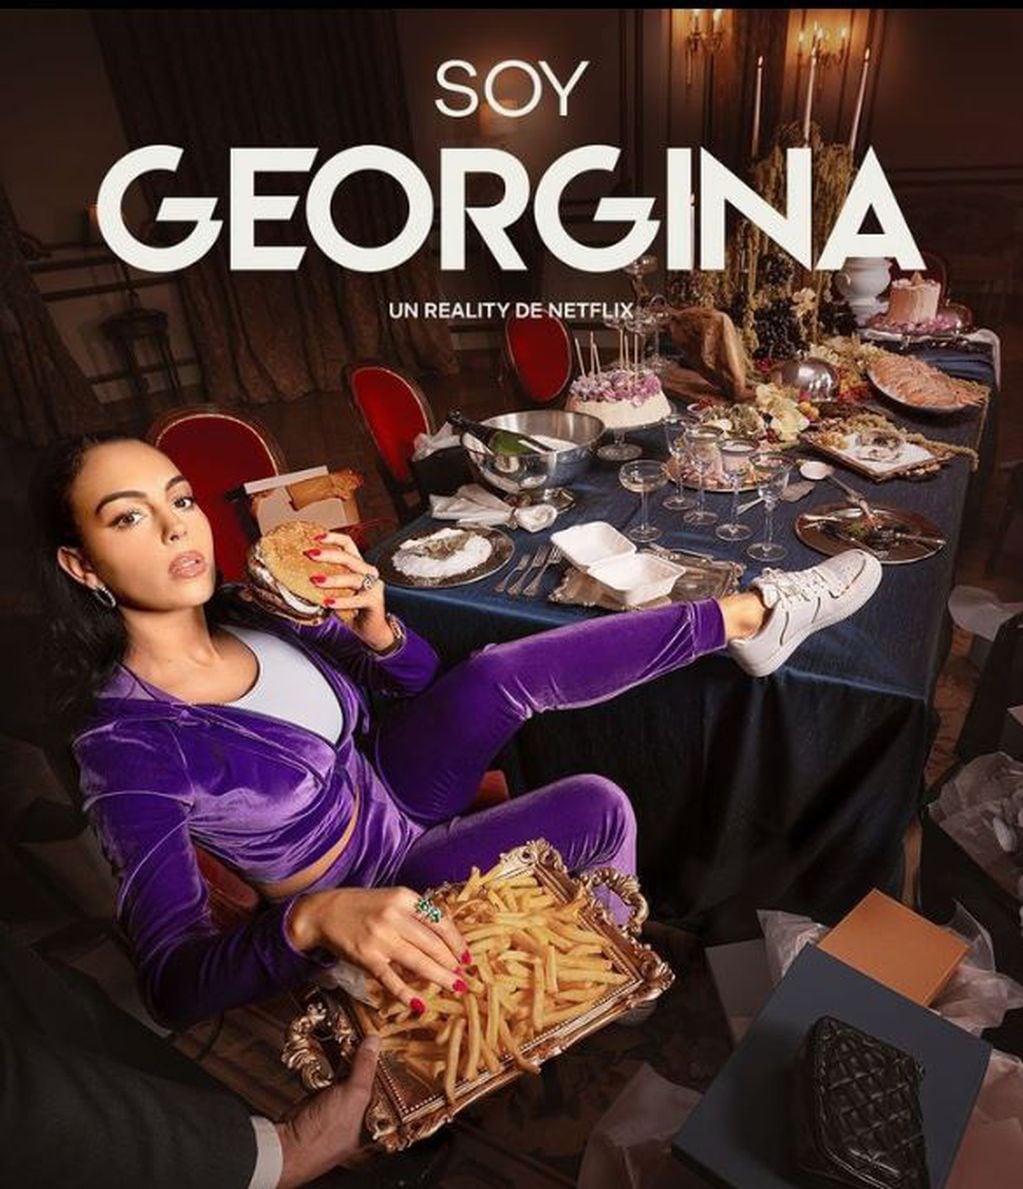 Soy Georgina vuelve a Netflix